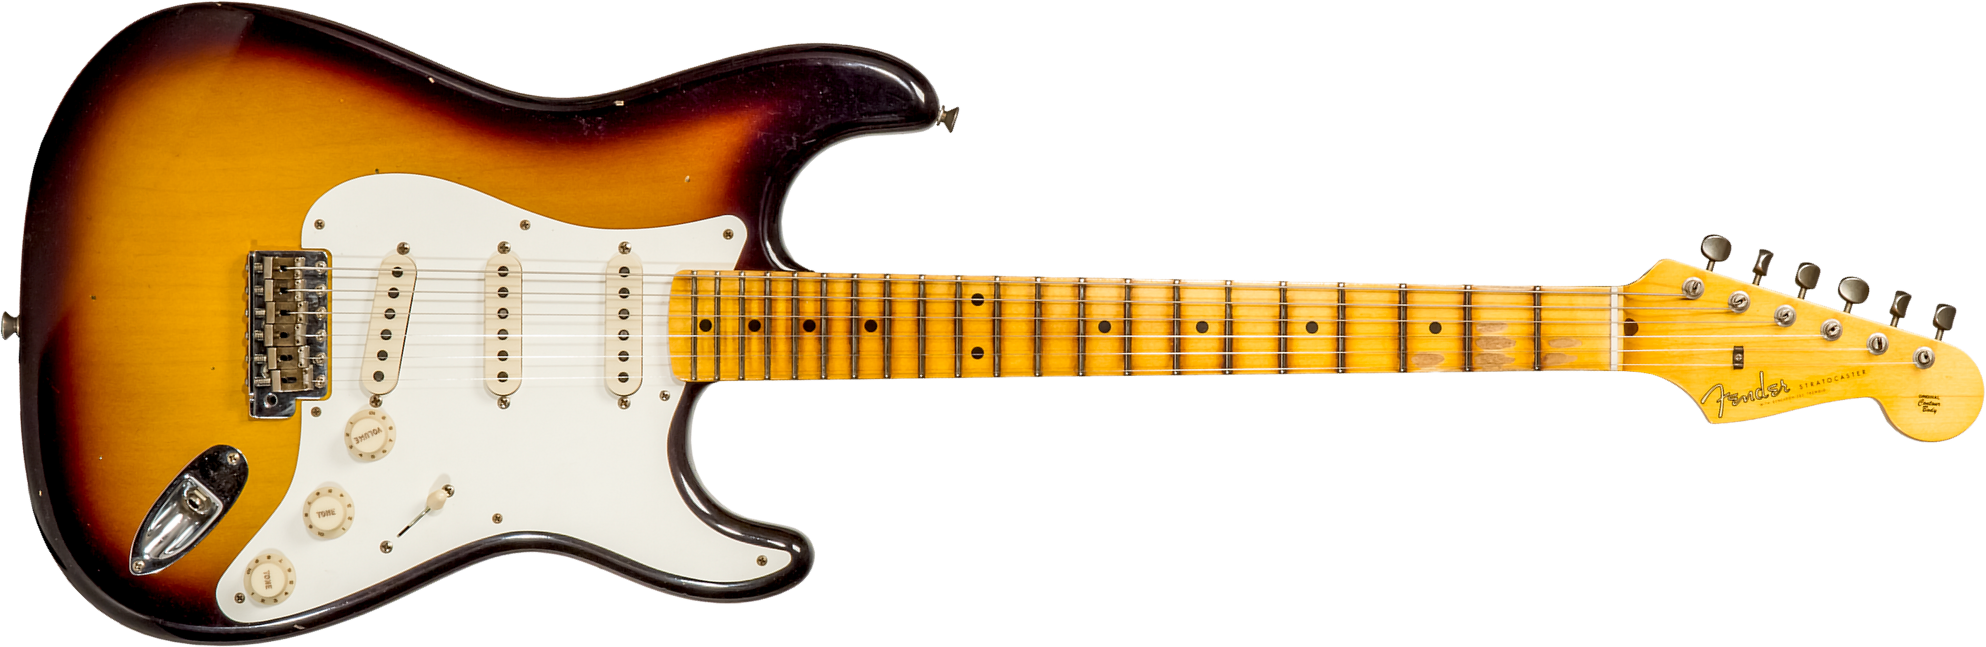 Fender Custom Shop Strat 1956 3s Trem Mn #cz570281 - Journeyman Relic Aged 2-color Sunburst - Elektrische gitaar in Str-vorm - Main picture